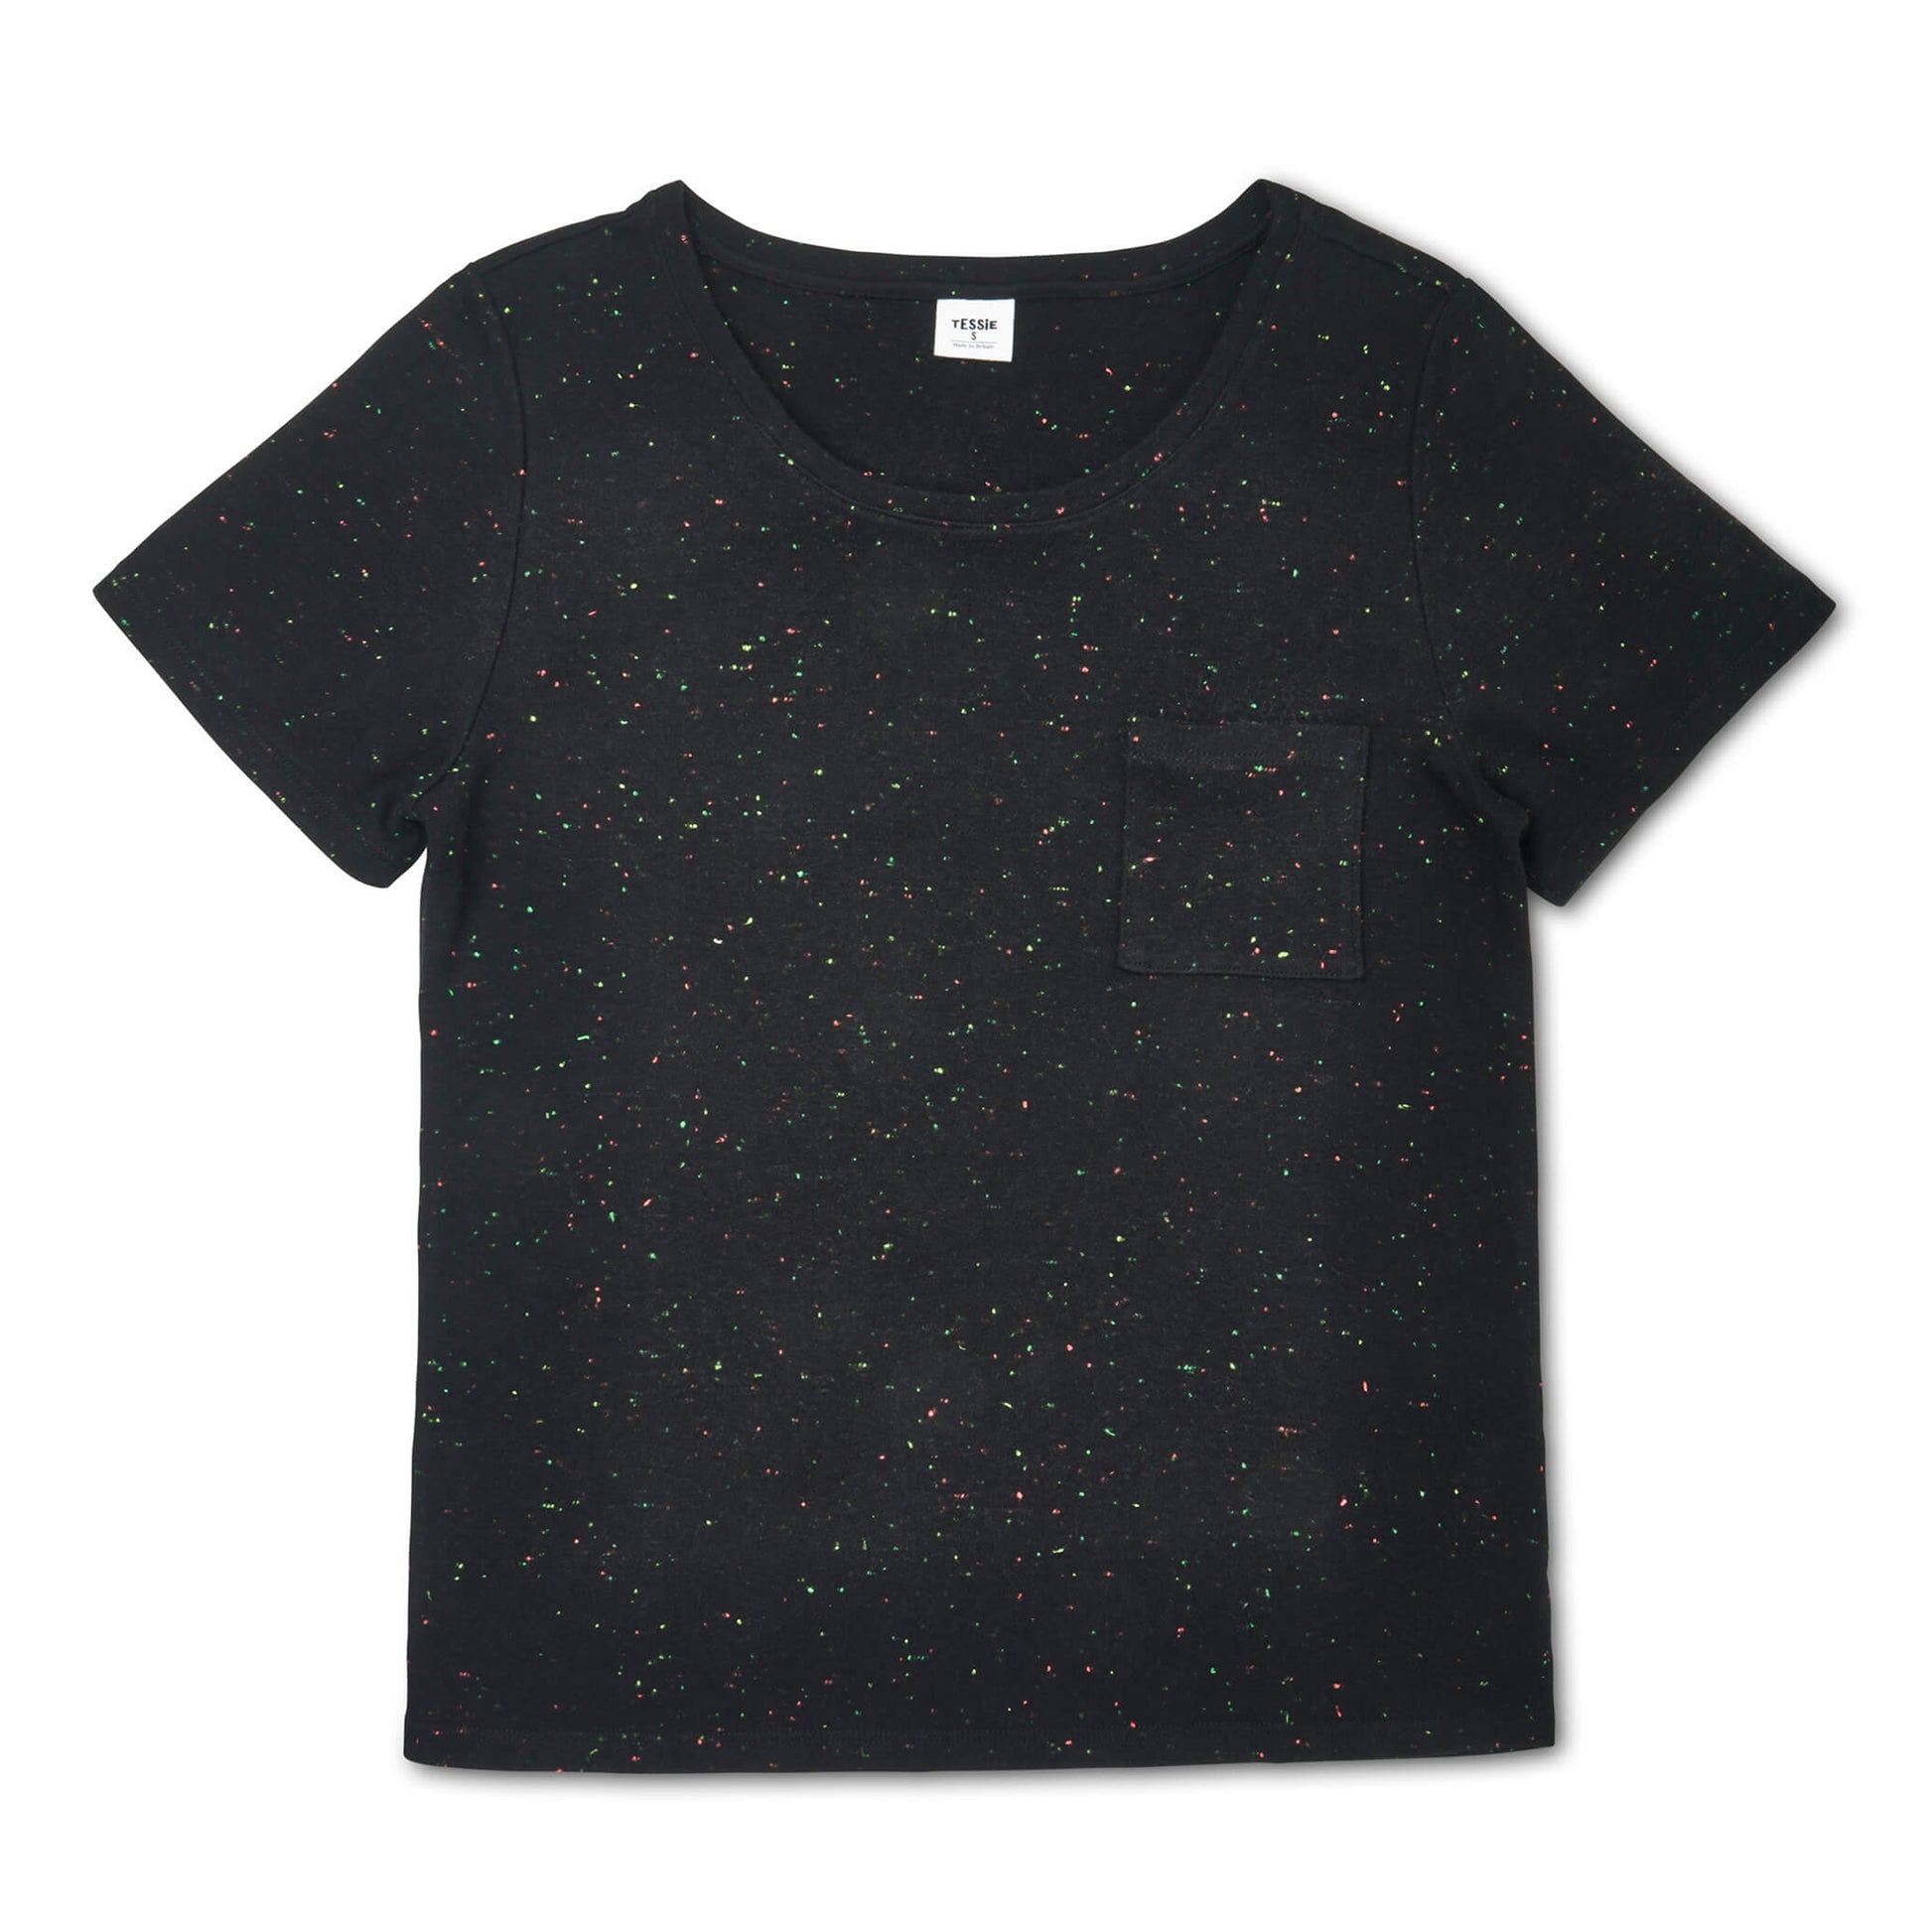 Tessie Confetti Black Pocket Tee | Ladies PJ Top | Women's Pyjamas | Women's Black Pocket T-Shirt | Black Short Sleeve T-Shirt | Nep Fabric